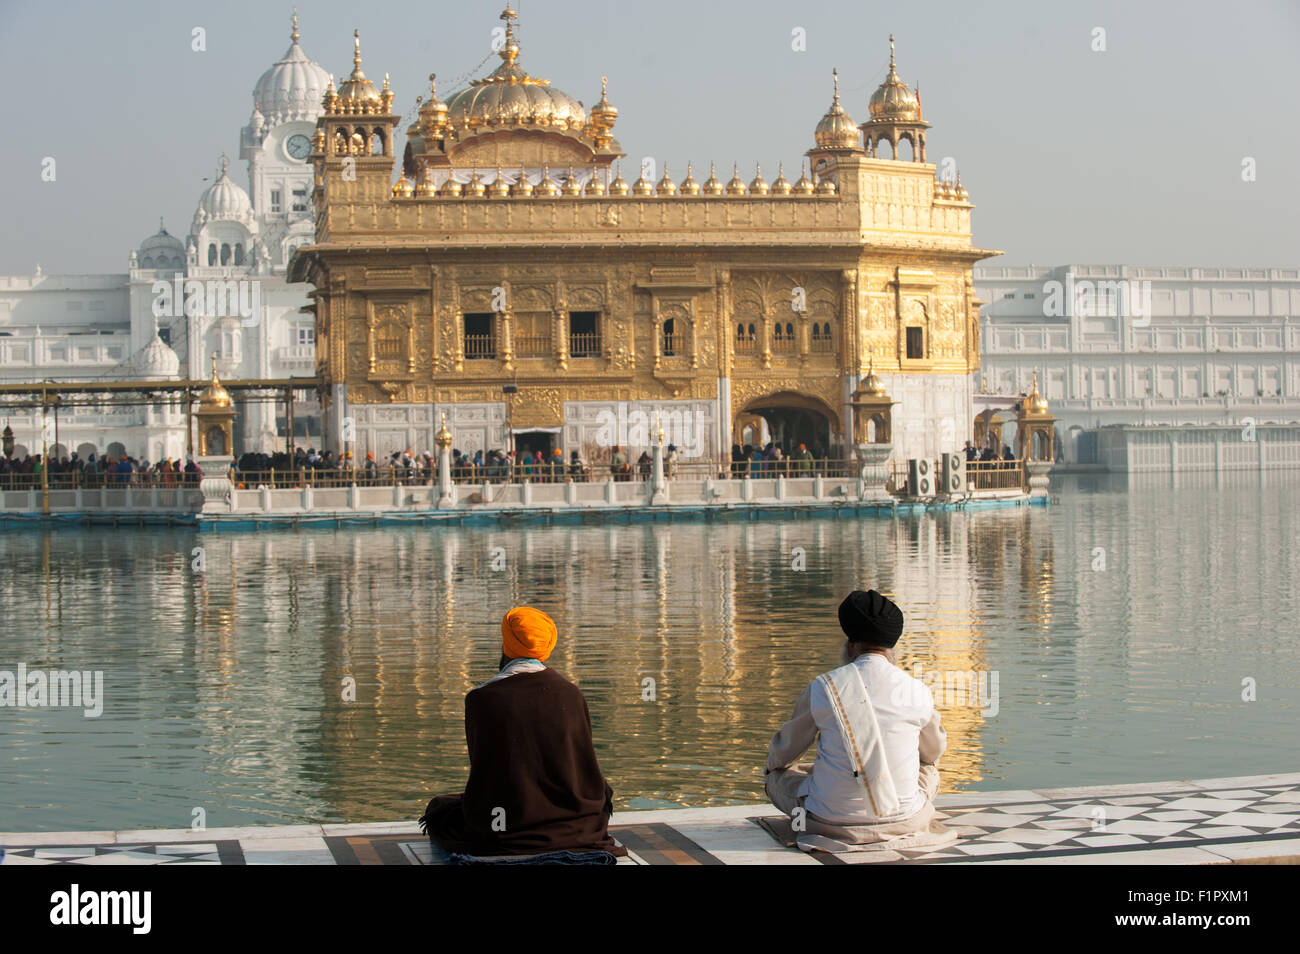 Amritsar Punjab, India. Il Tempio d'Oro - Harmandir Sahib - con due uomini Sikh seduto a gambe incrociate accanto all'acqua santa di l'Amrit Sarovar lago, guardando l'Harmandir Sahib tempio. Foto Stock